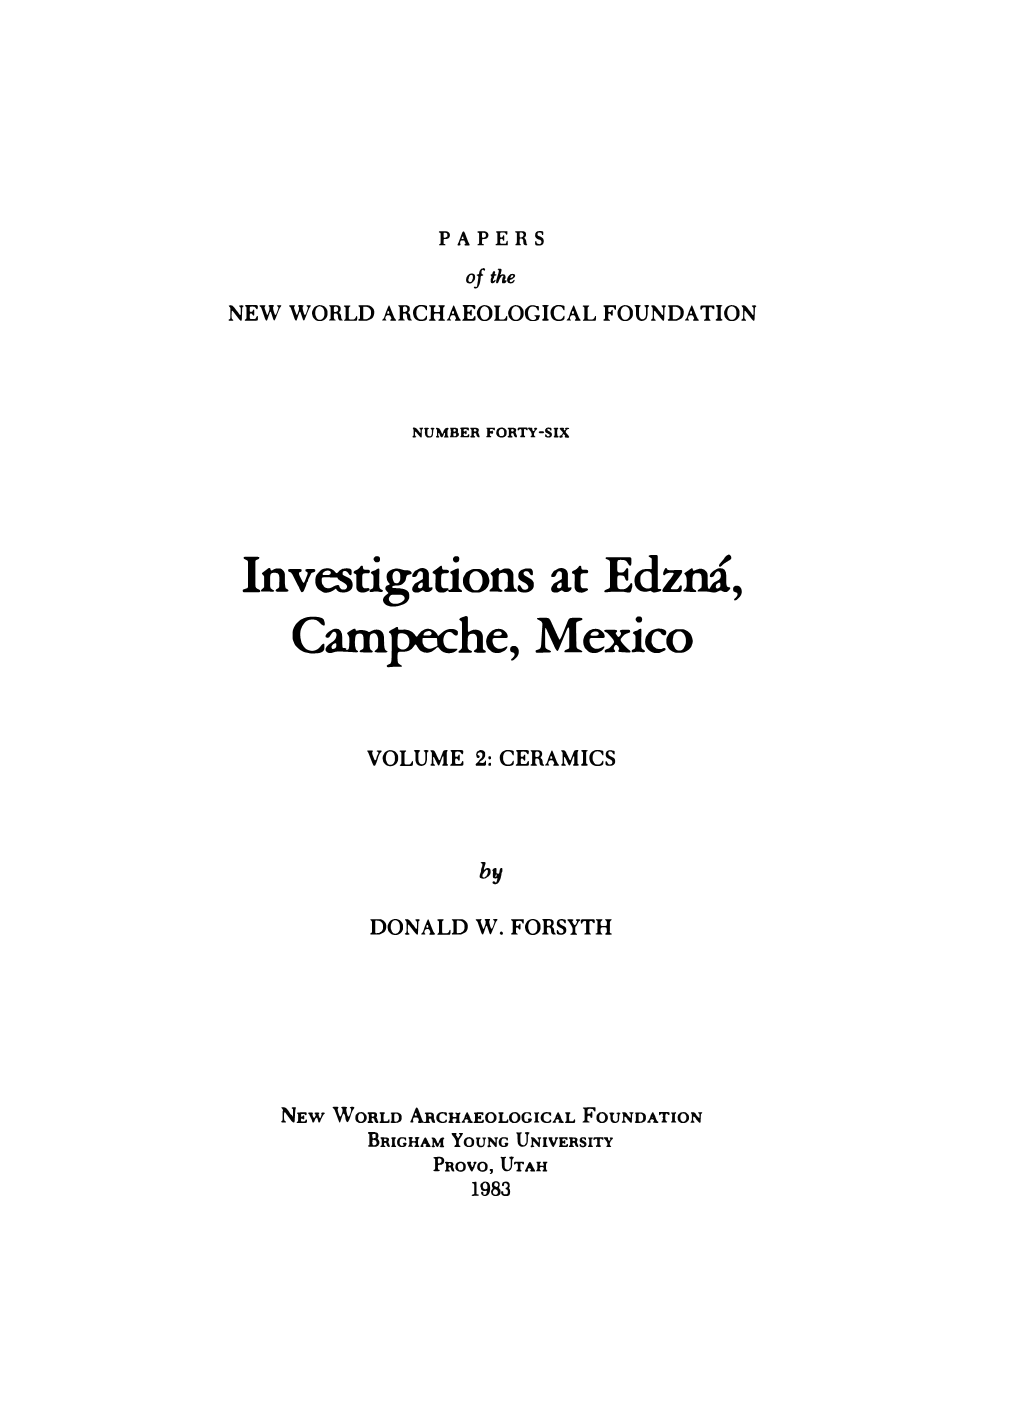 Investigations at Edztla, Campeche, Mexico